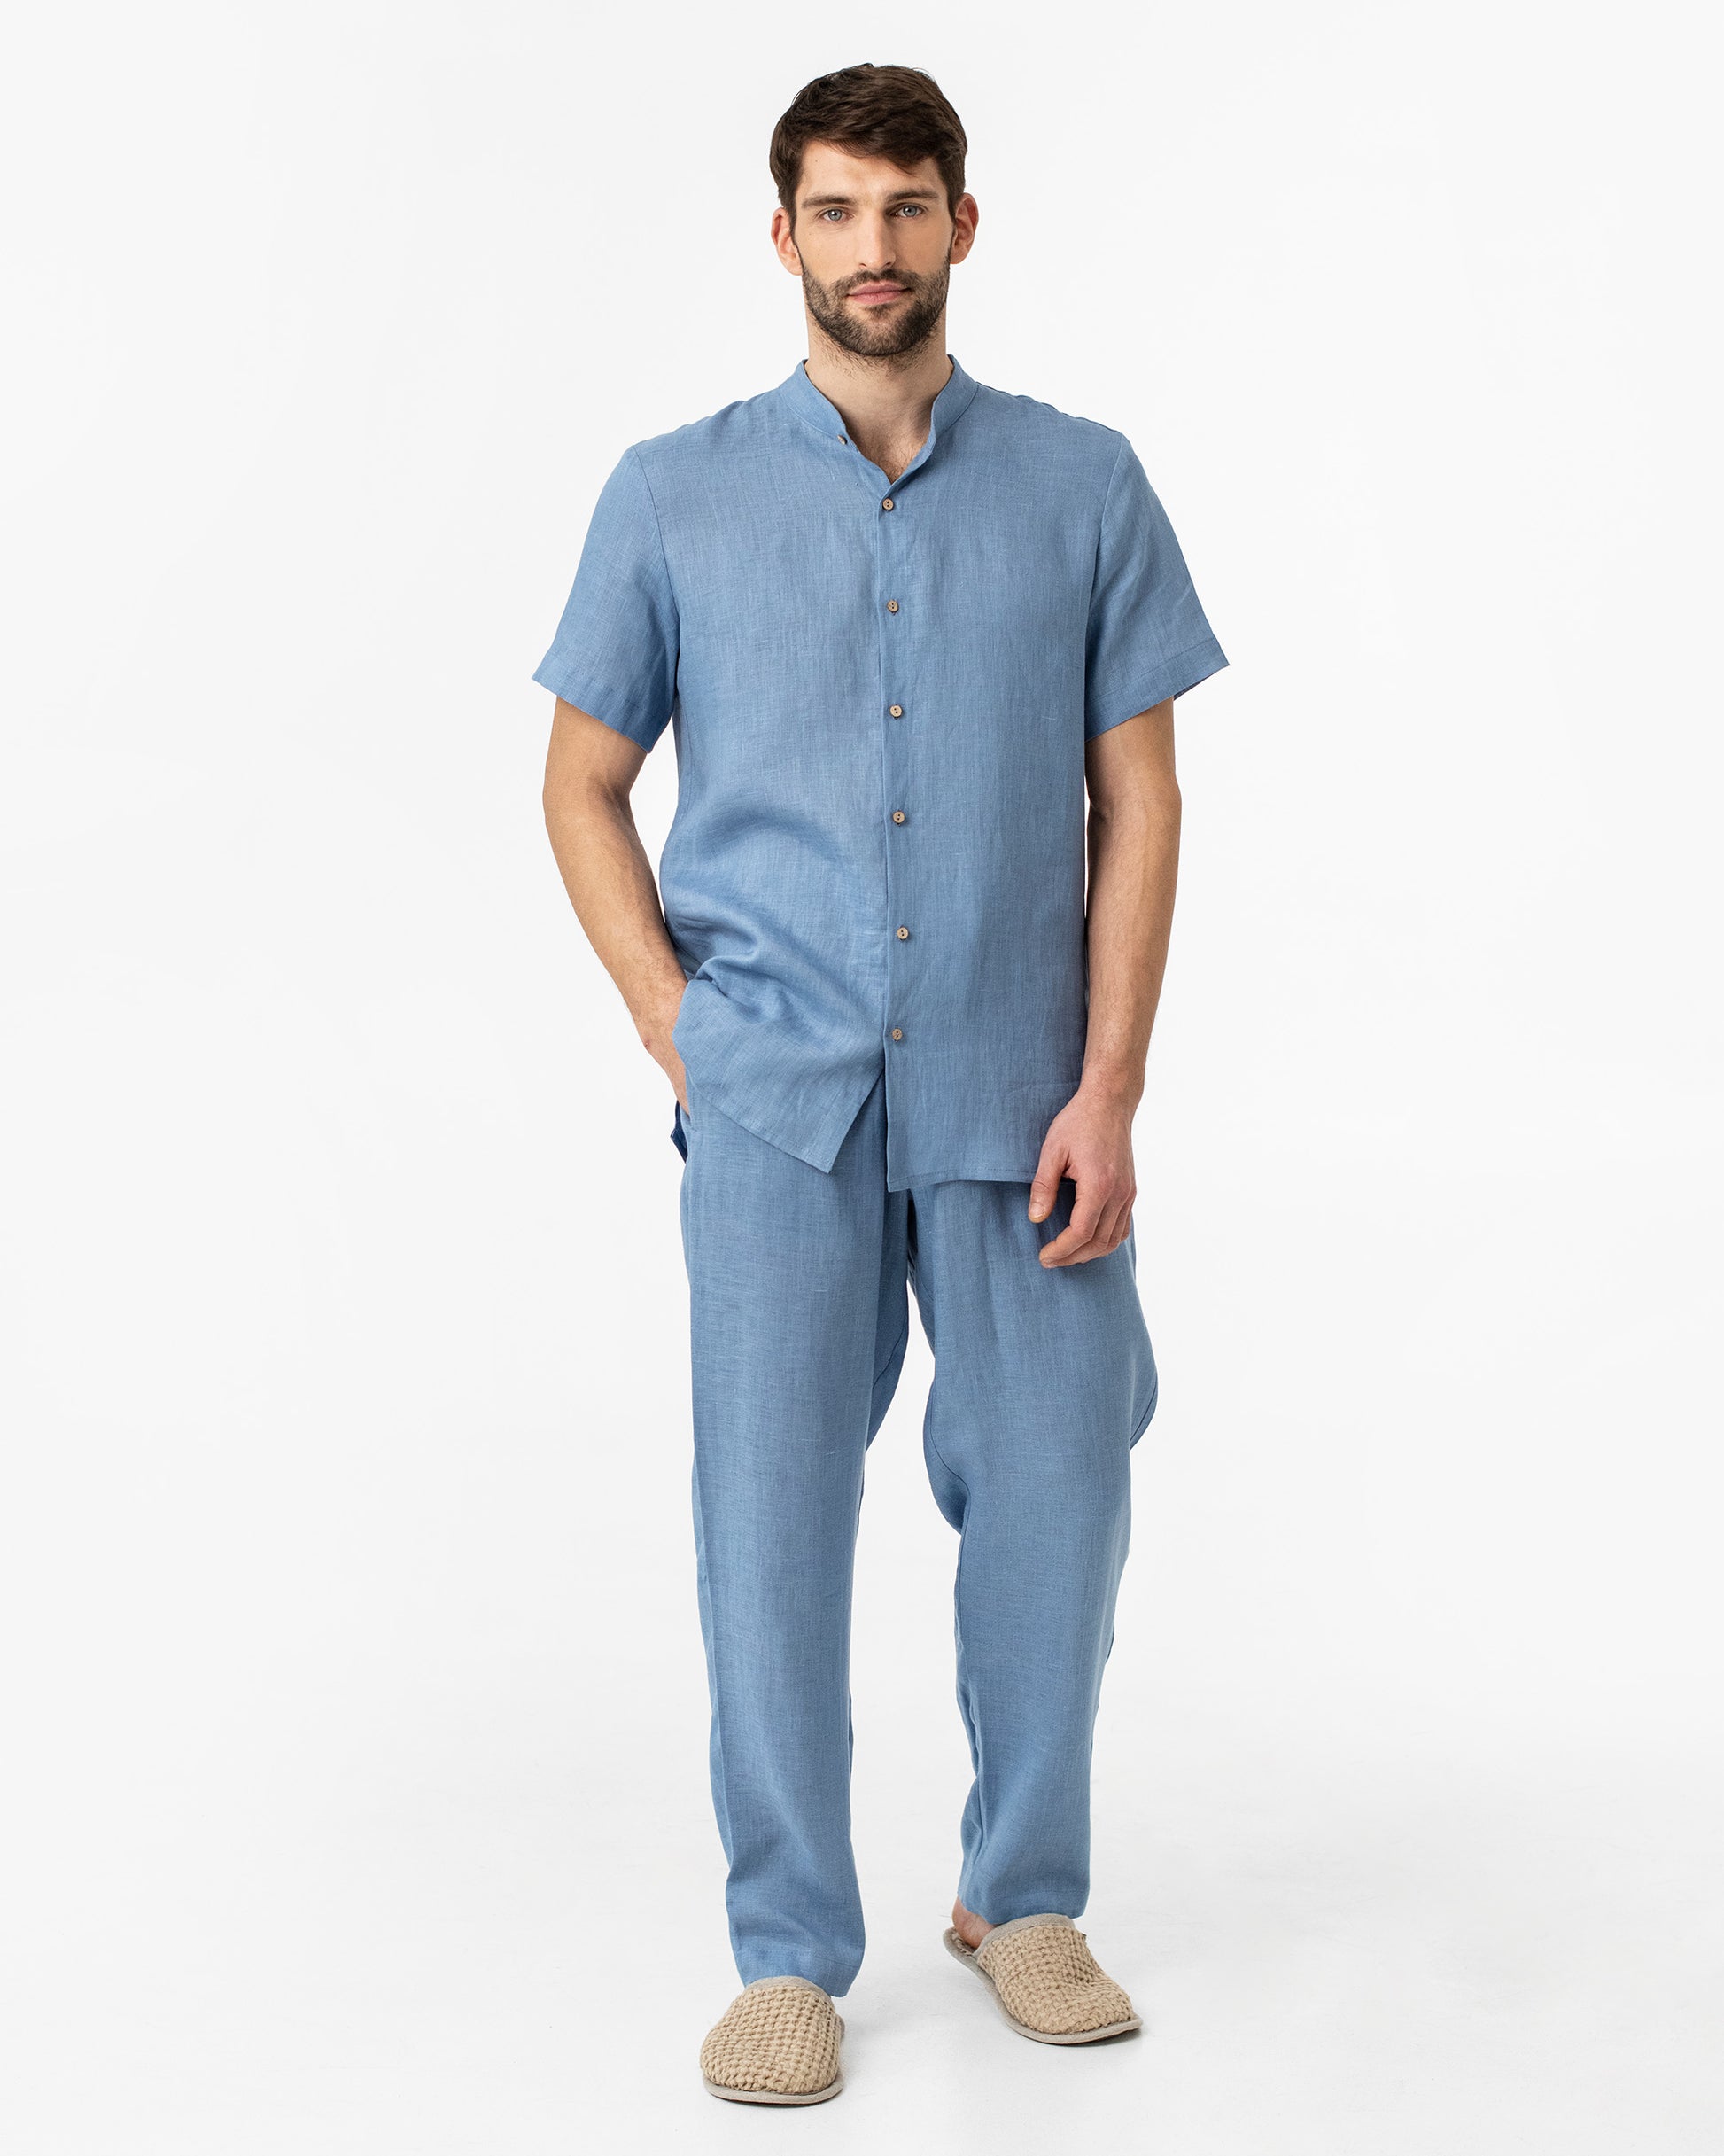 Men's linen pajama set LUTRY - MagicLinen